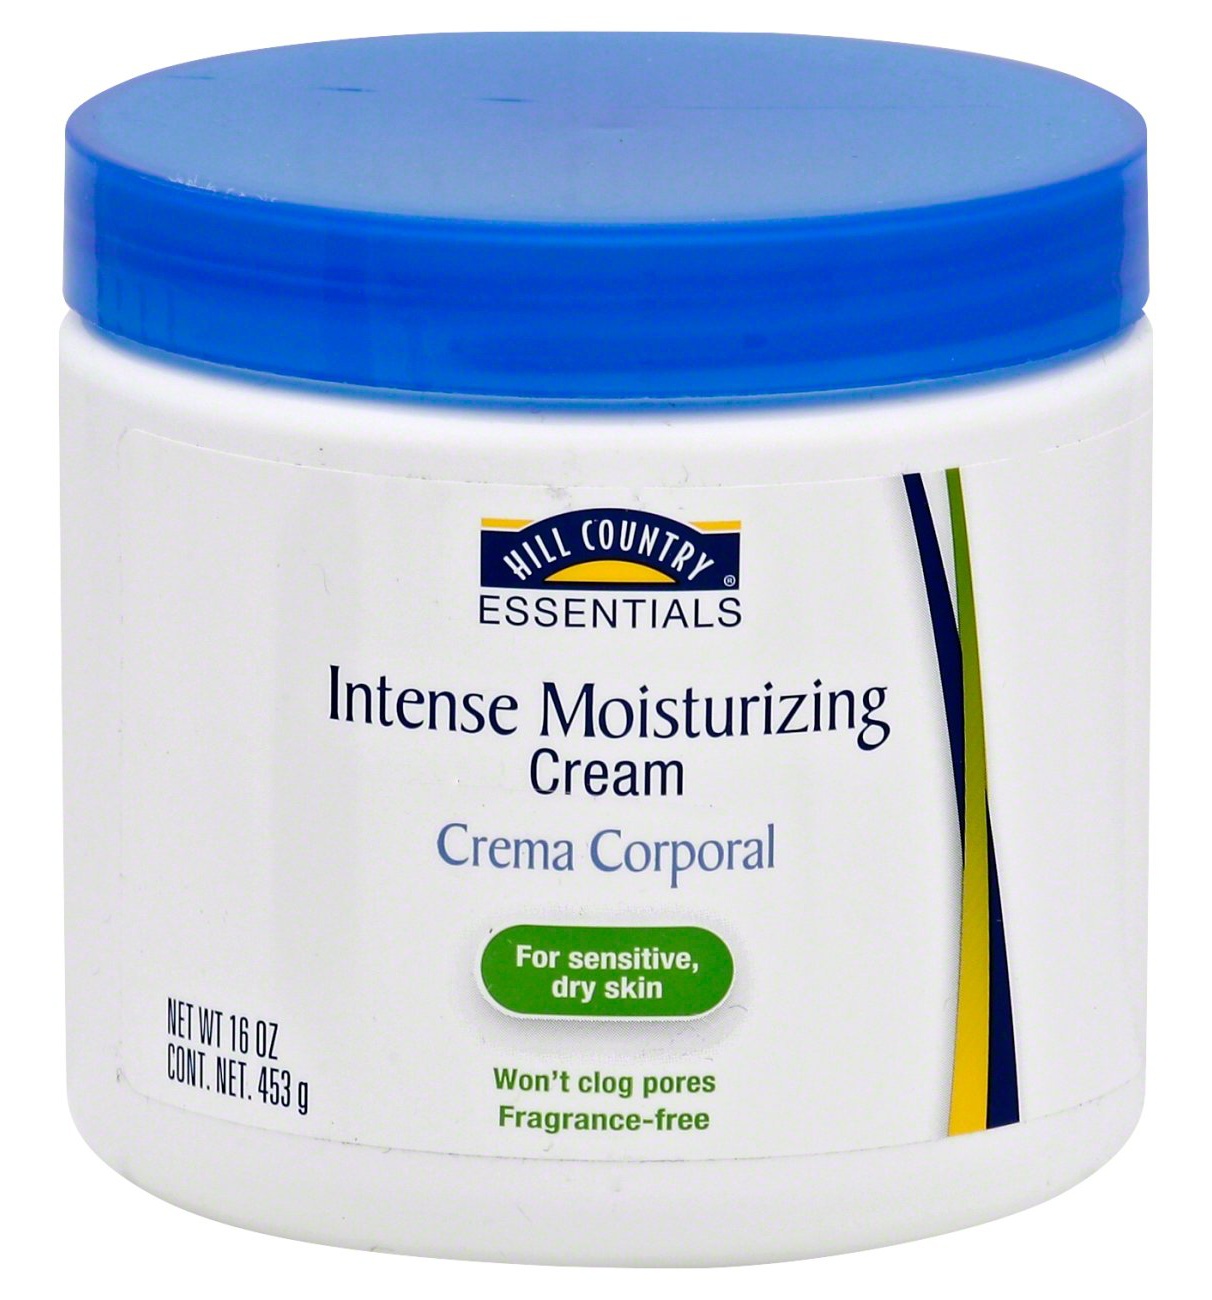 Hill Country Essentials Intense Moisturizing Cream